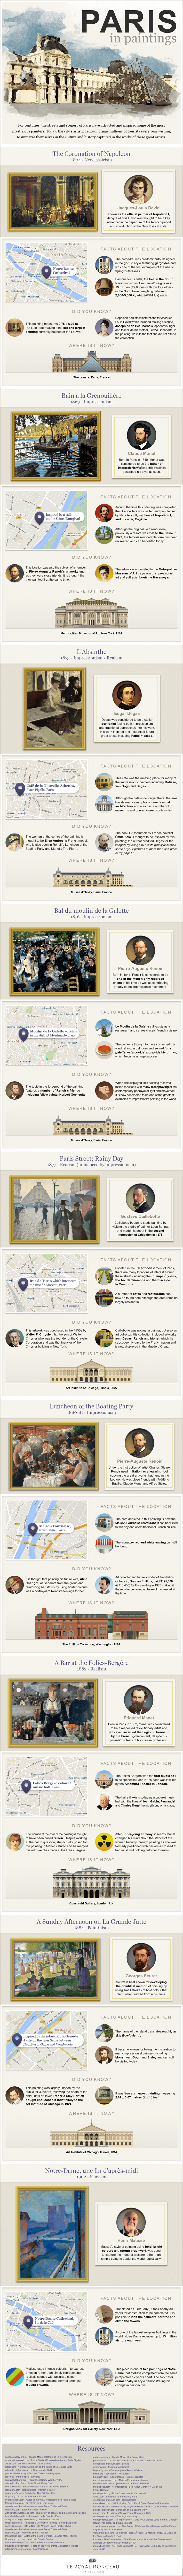 Paris in Paintings - Art Infographic